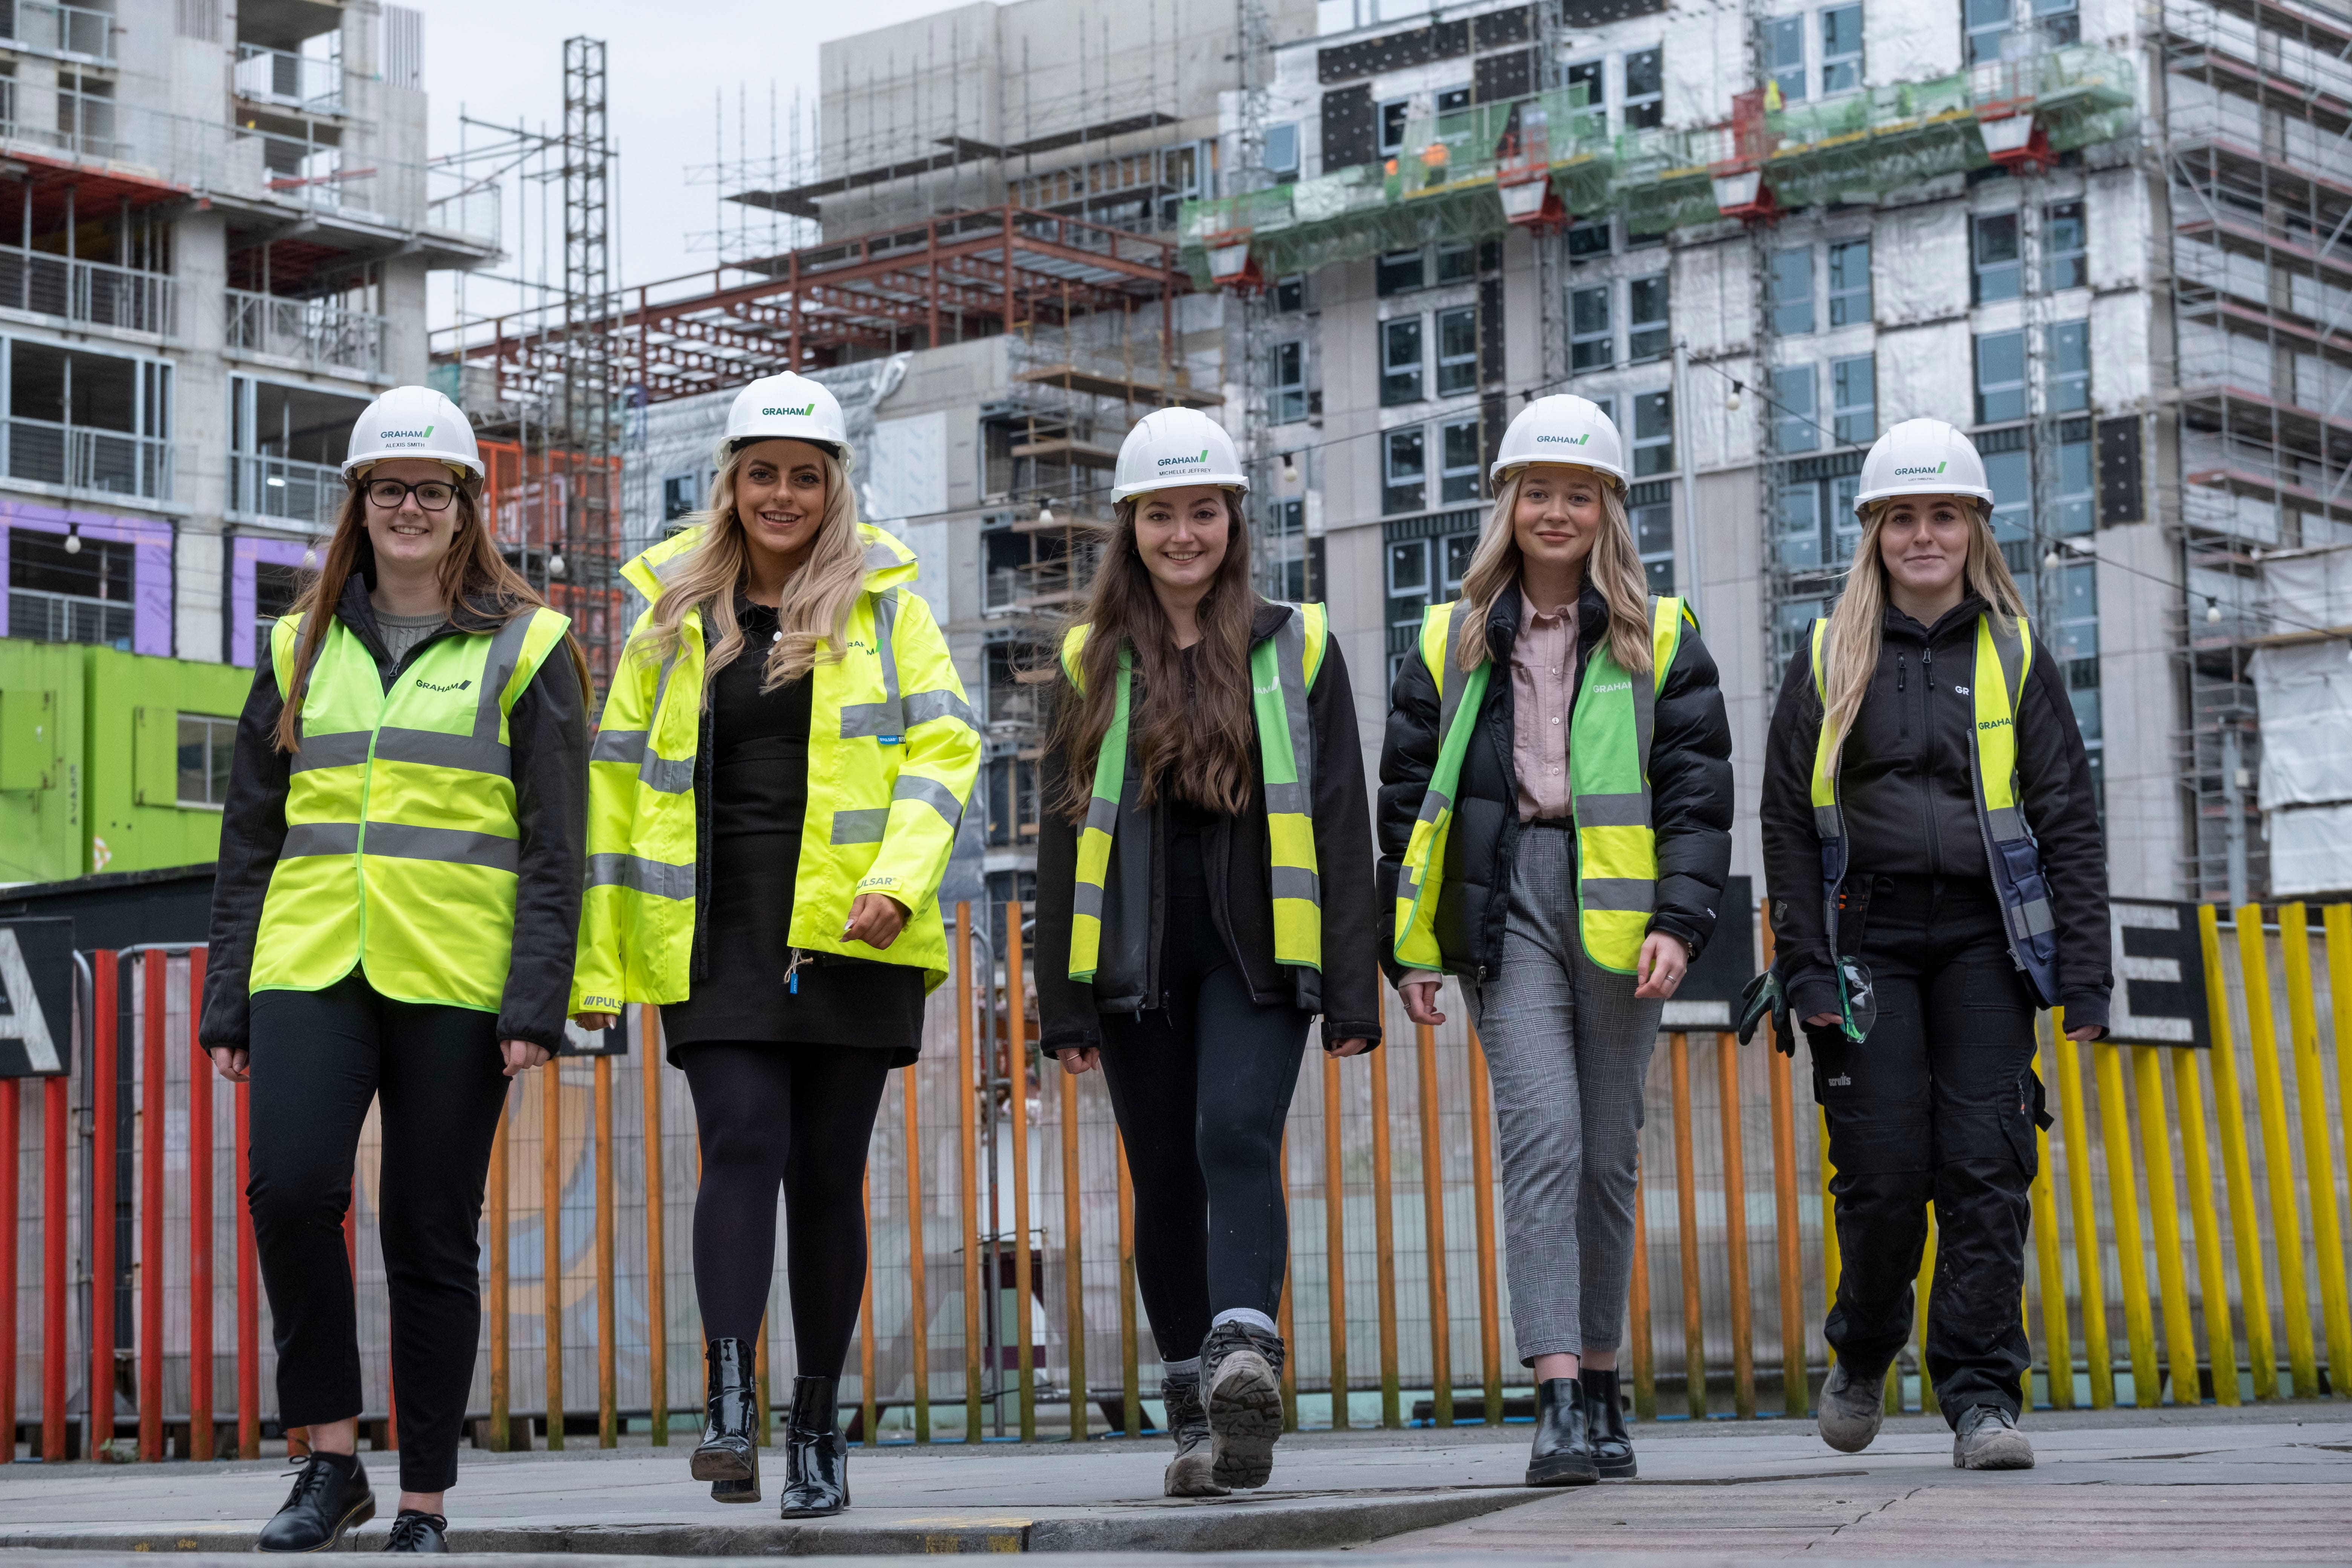 GRAHAM celebrates next generation of women in construction